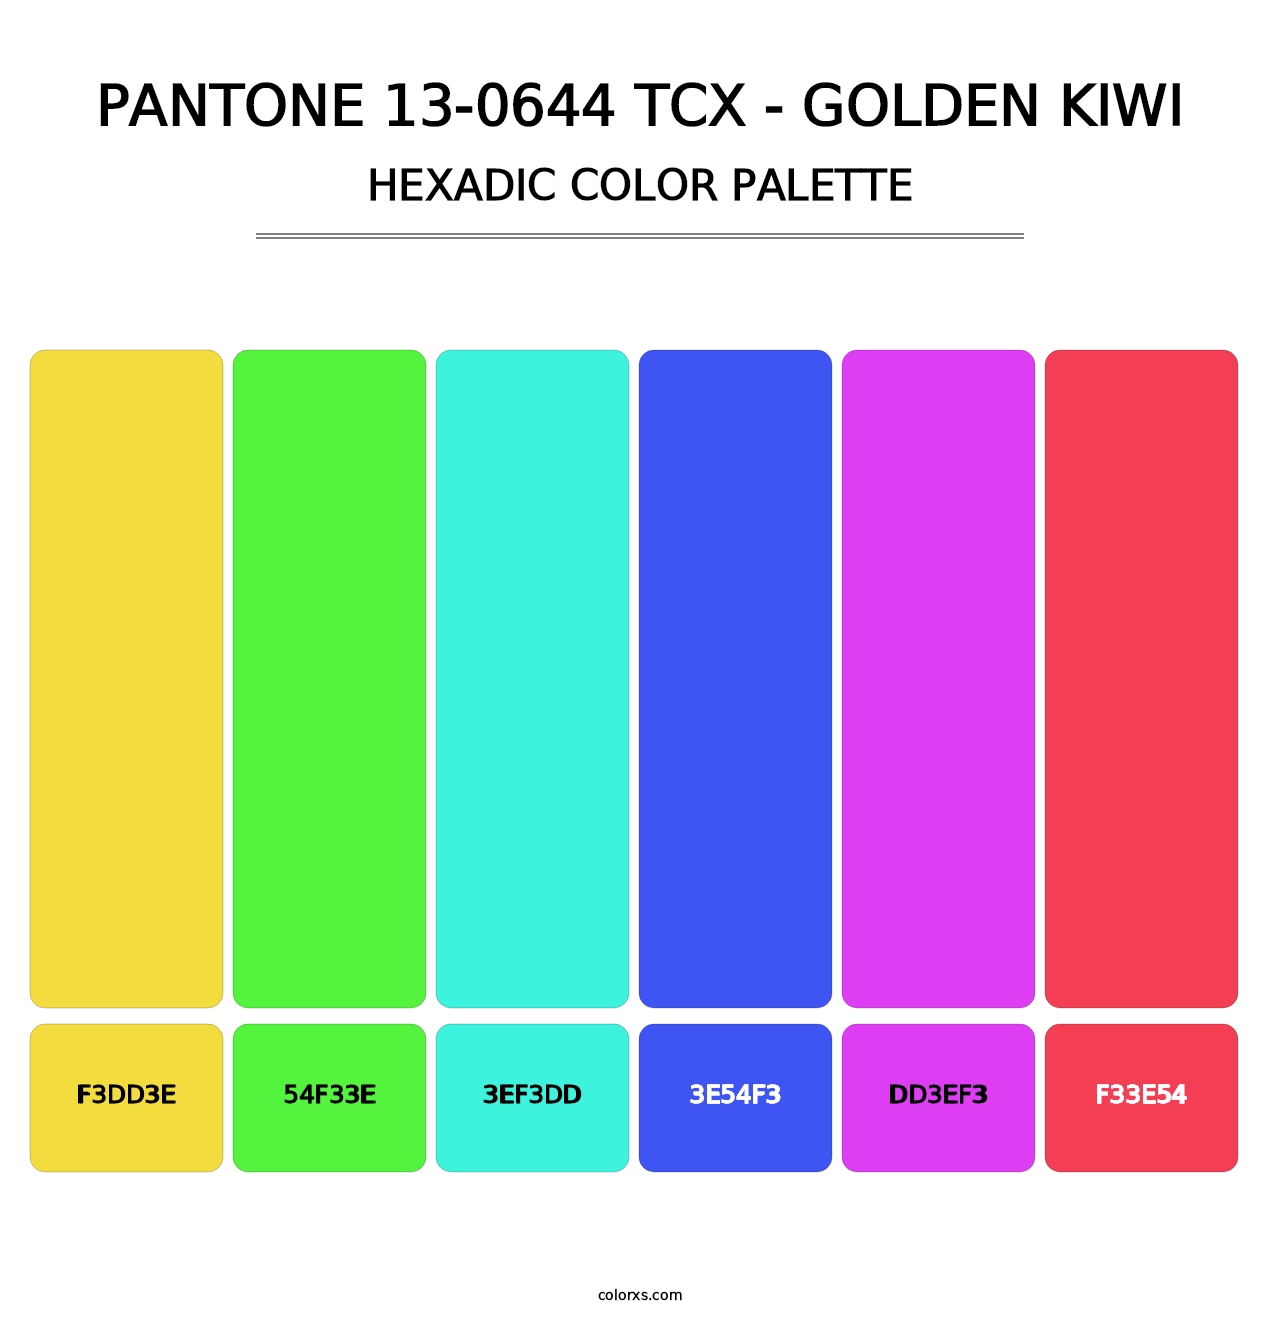 PANTONE 13-0644 TCX - Golden Kiwi - Hexadic Color Palette